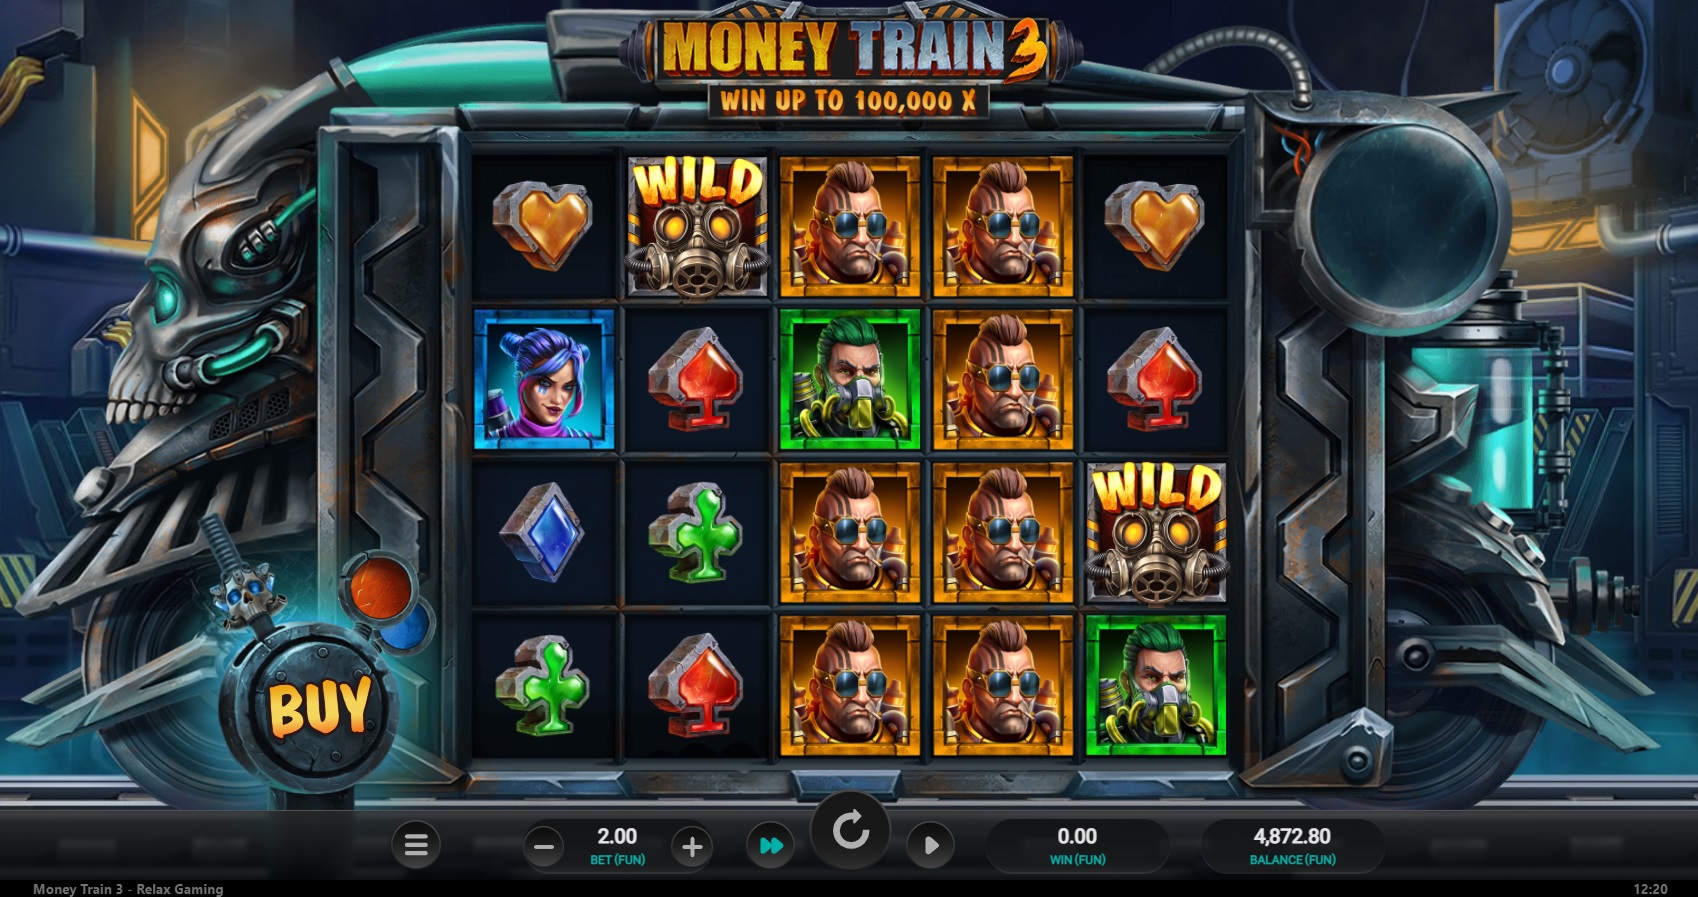 Money Train 3, Main slot game